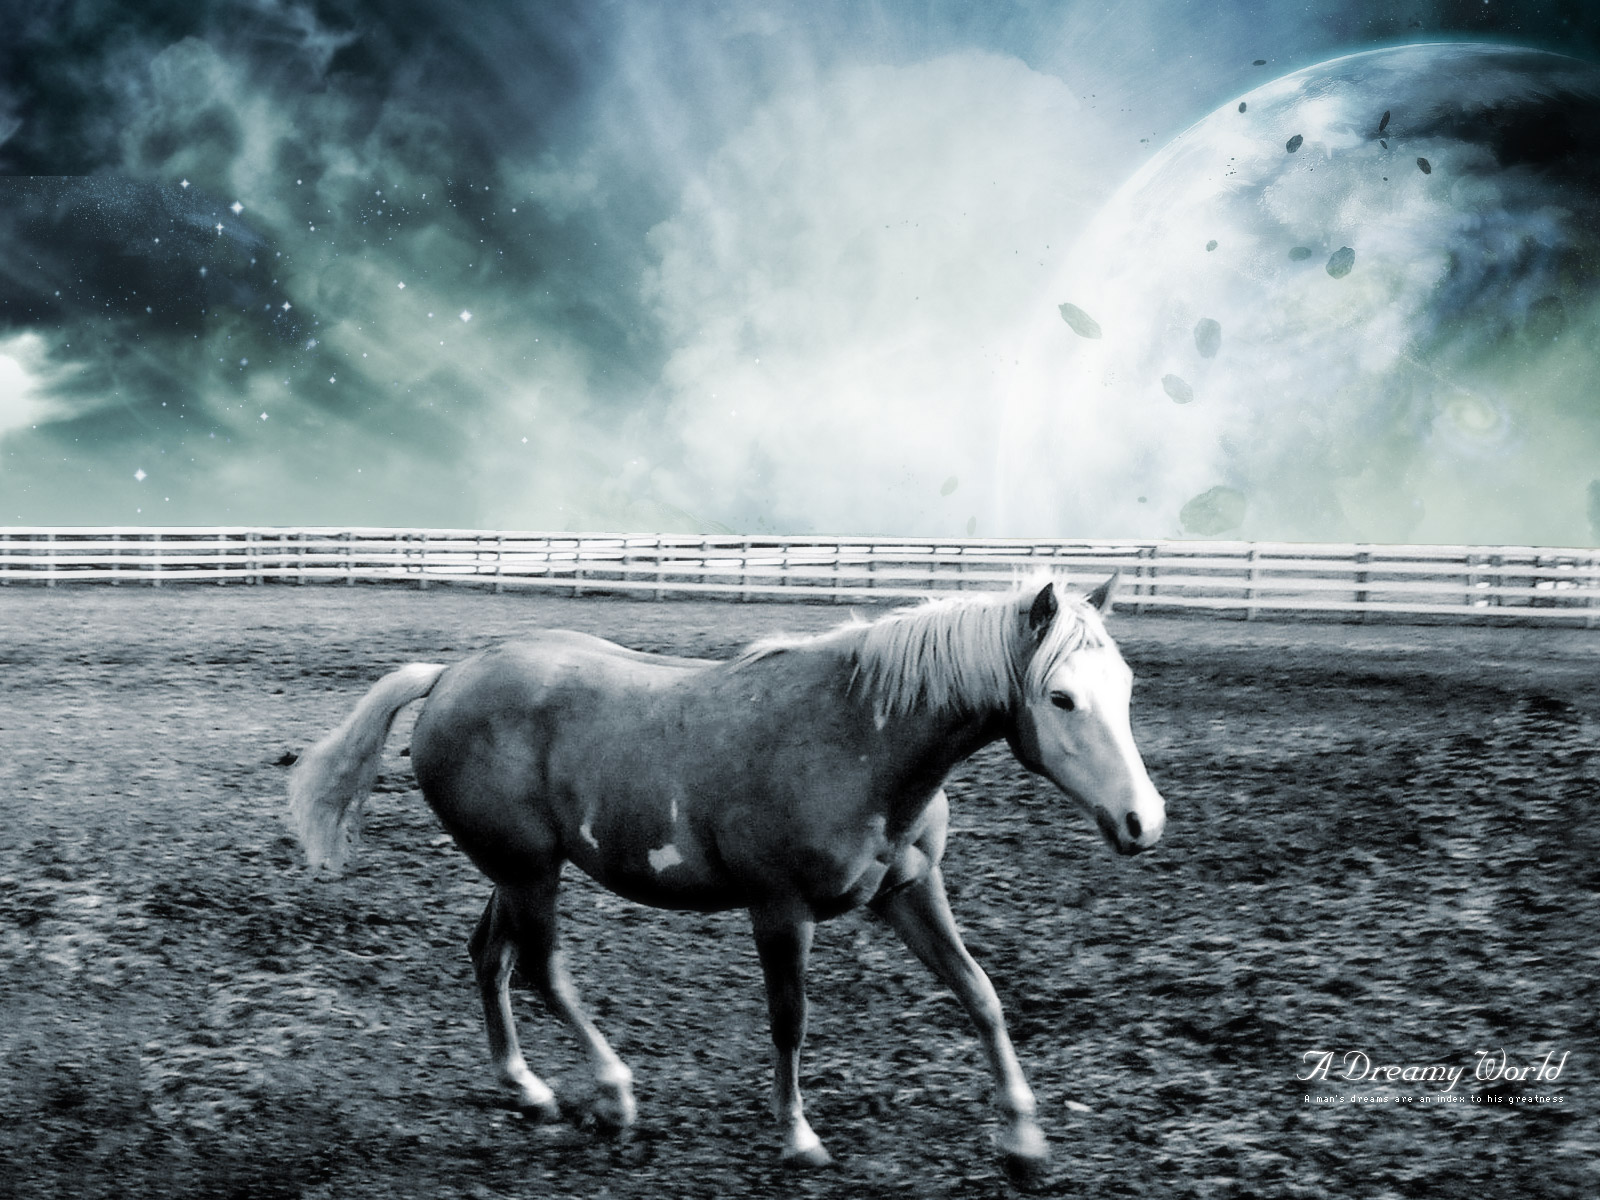 Previous, Animals - Horses - The Horse wallpaper